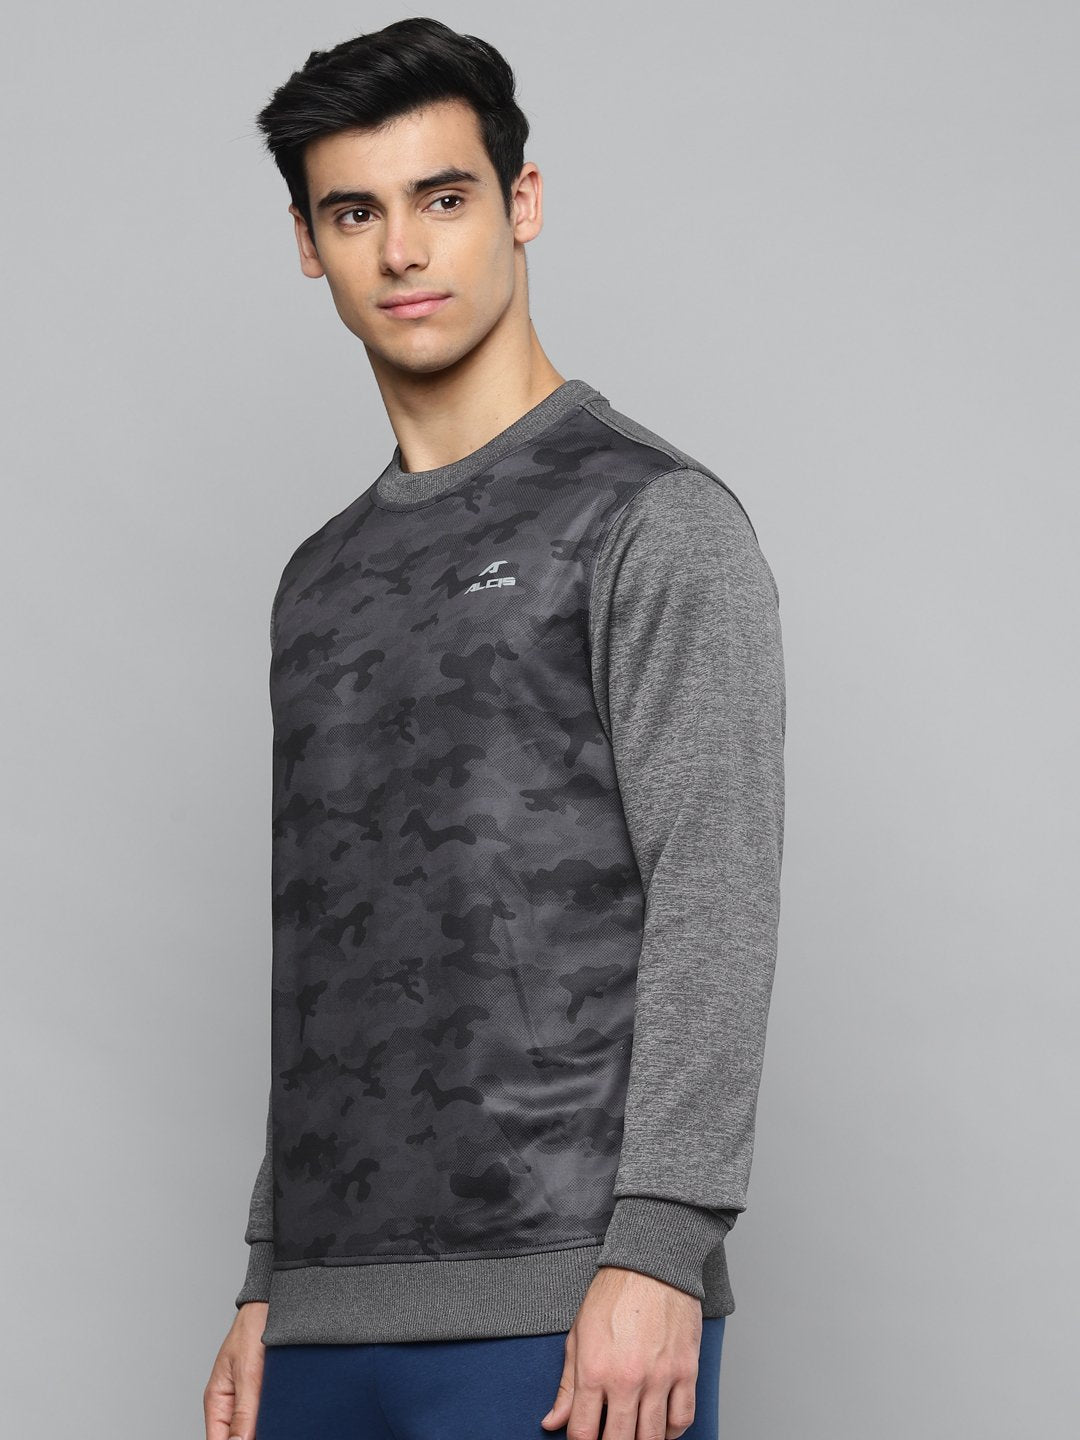 Alcis Men Grey Camouflage Printed Sweatshirt